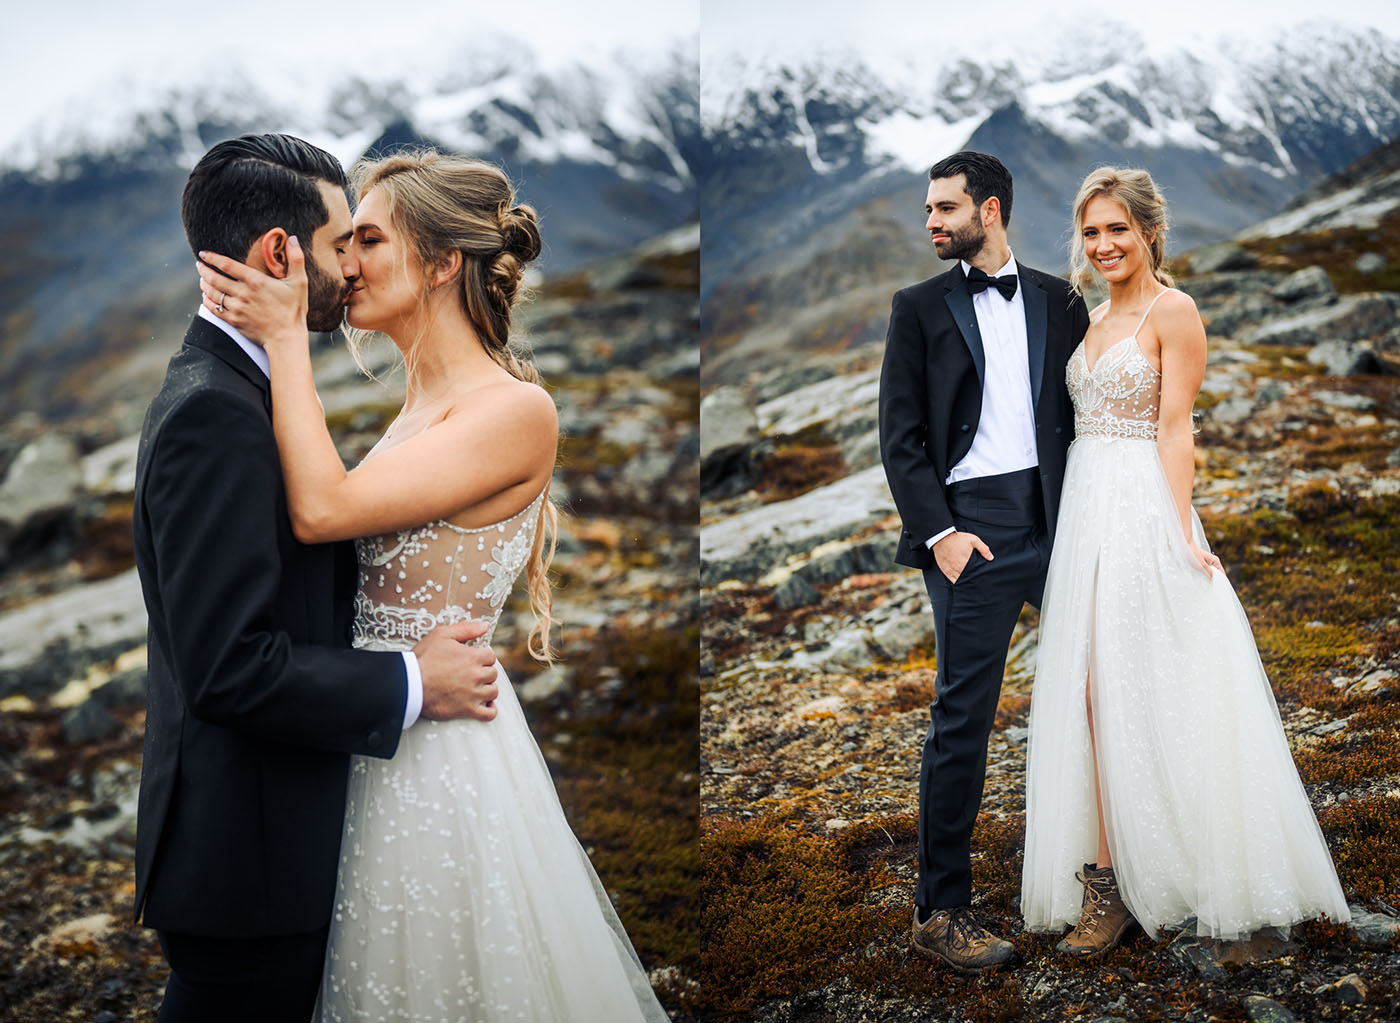 Charleton Churchill Photography – Capturing Alaskan Weddings Uniquely